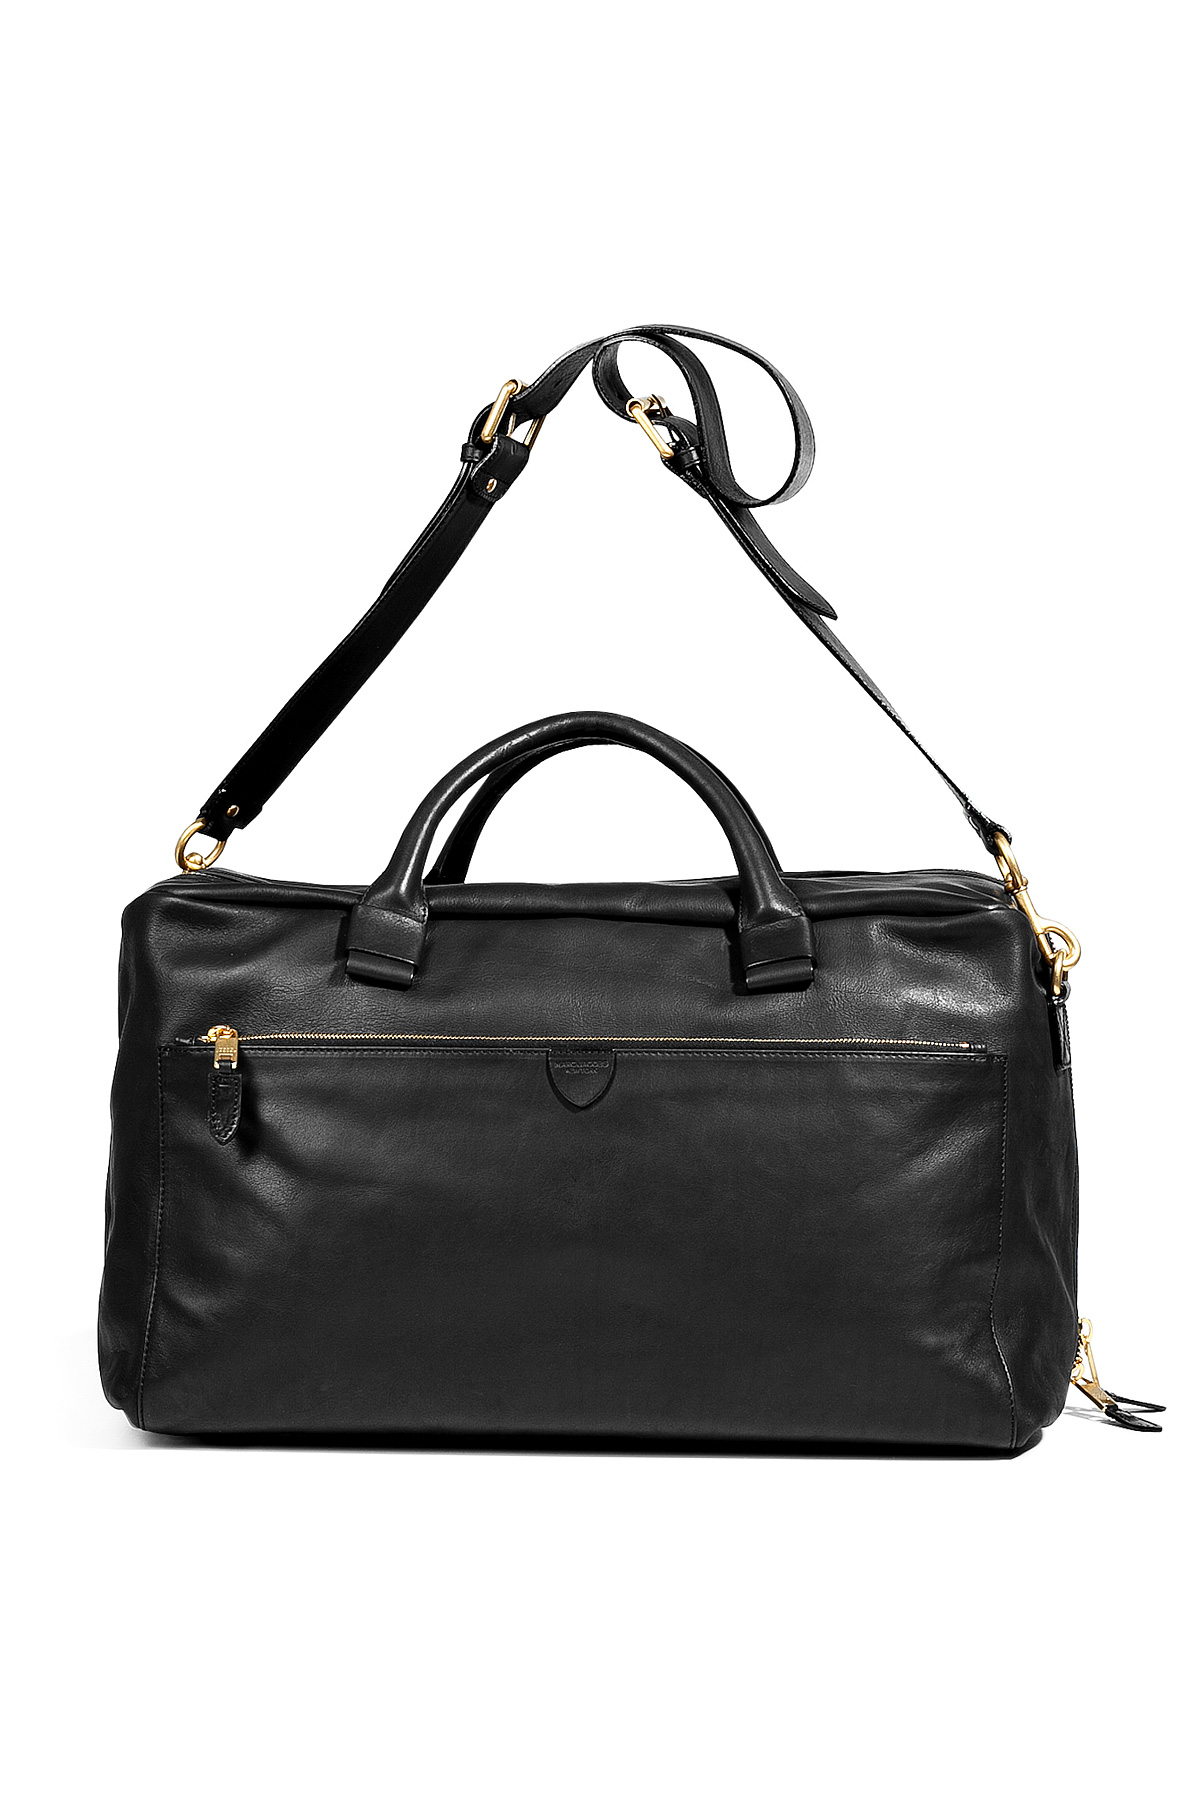 Marc jacobs Leather Travel Bag in Black for Men | Lyst  